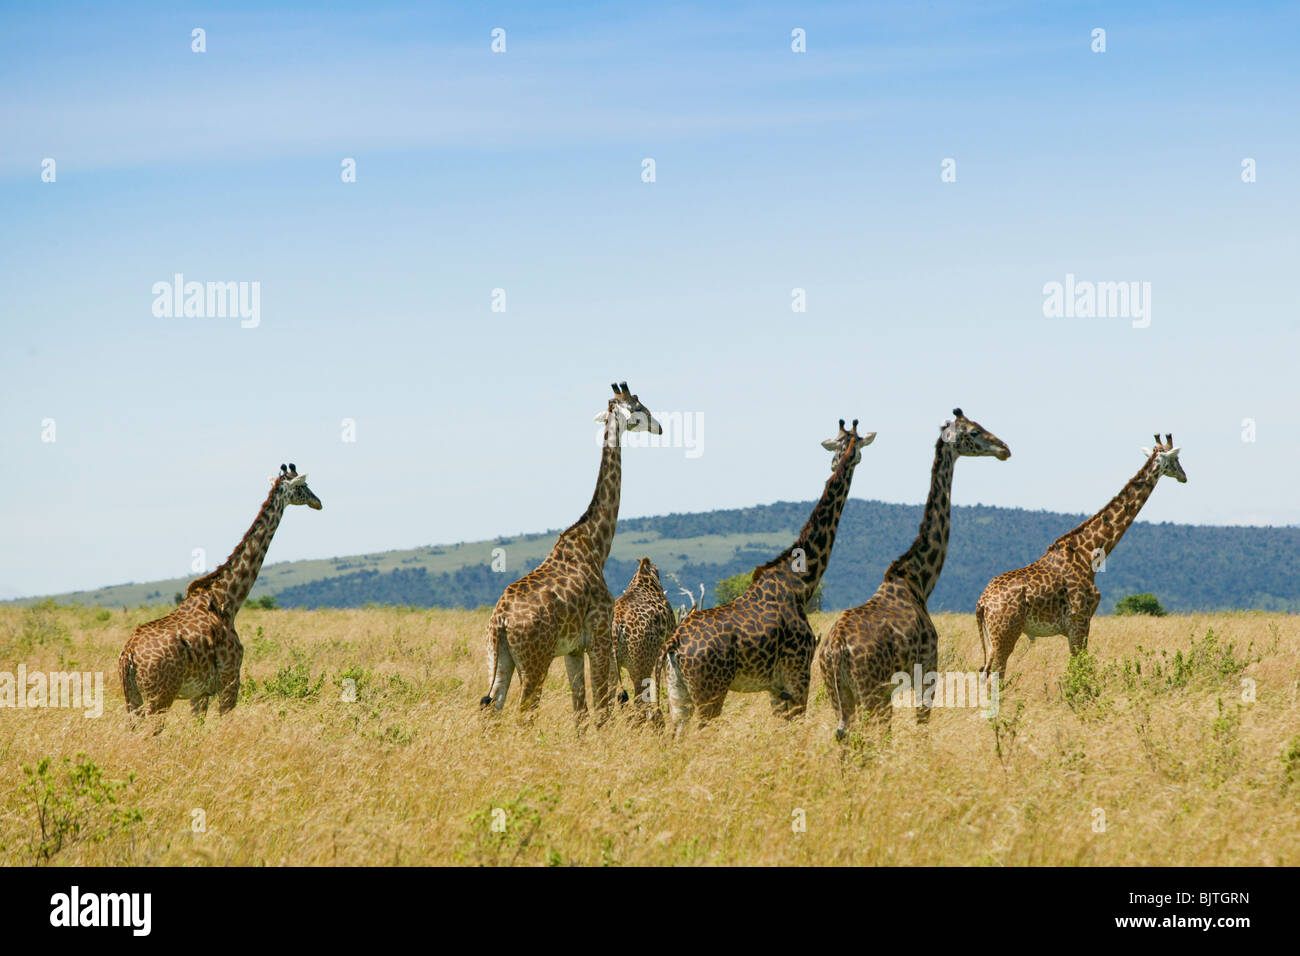 Herd of giraffes, Africa Stock Photo